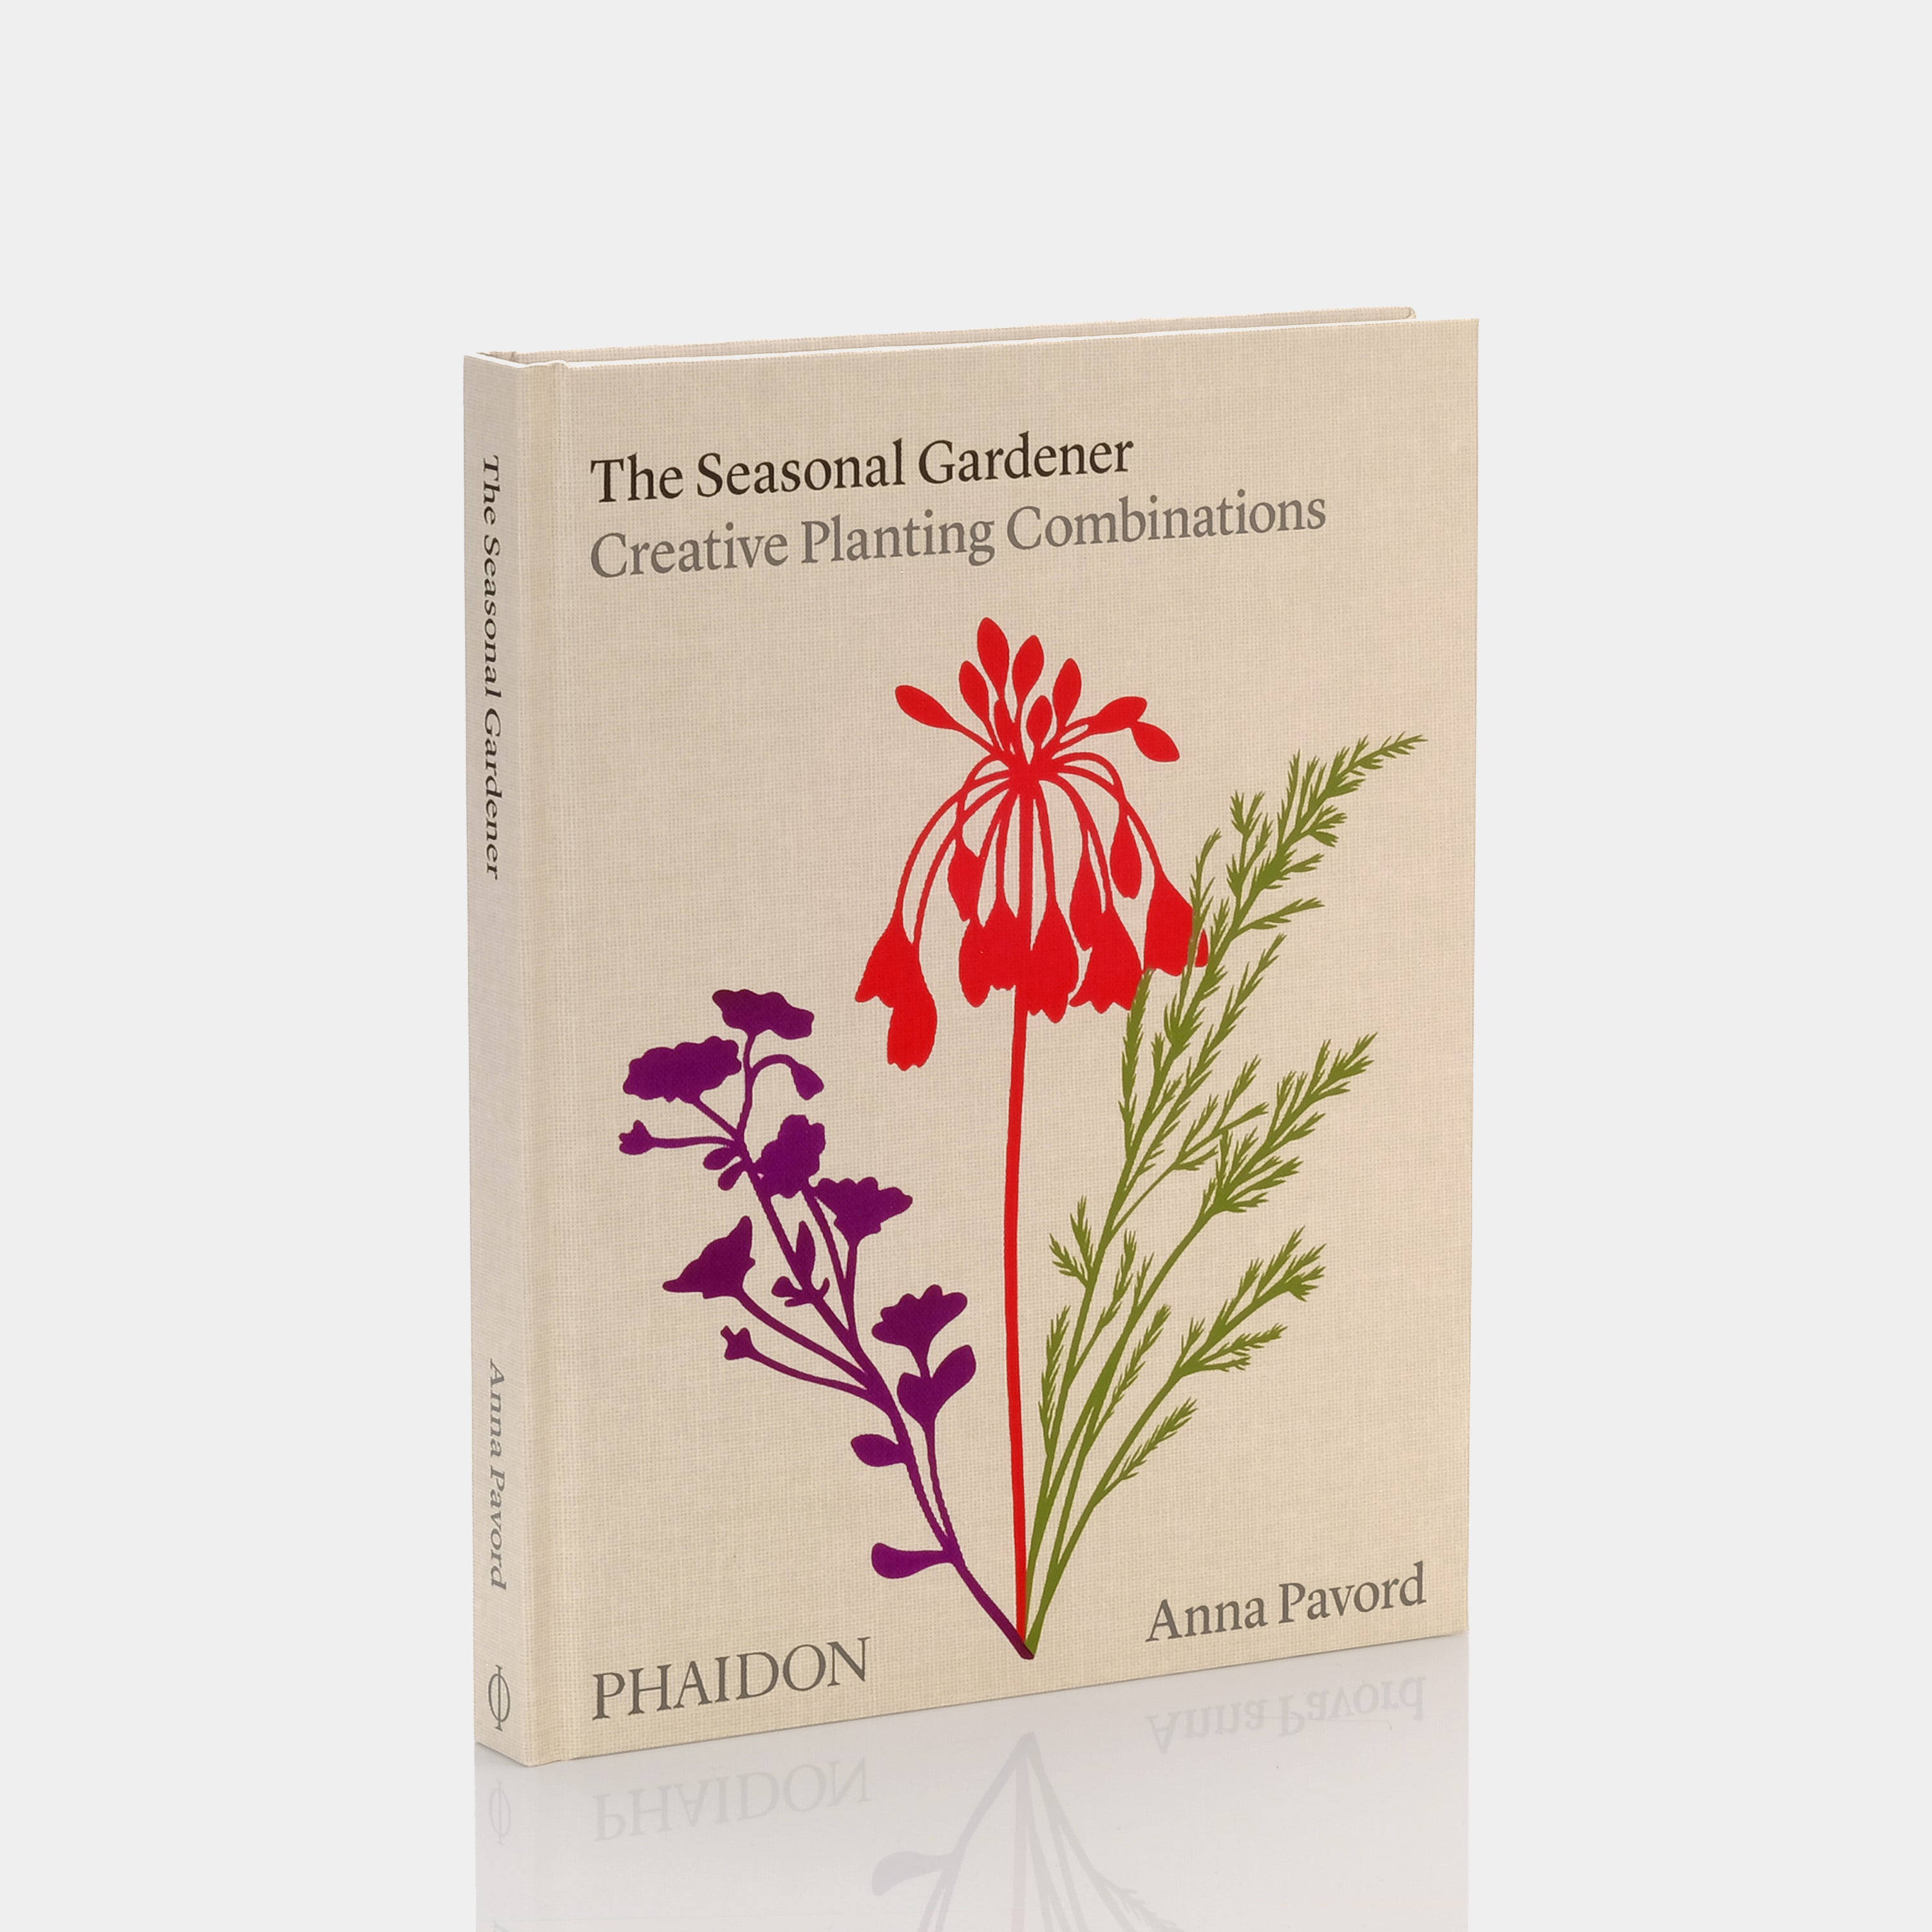 The Seasonal Gardener: Creative Planting Combinations Phaidon Book